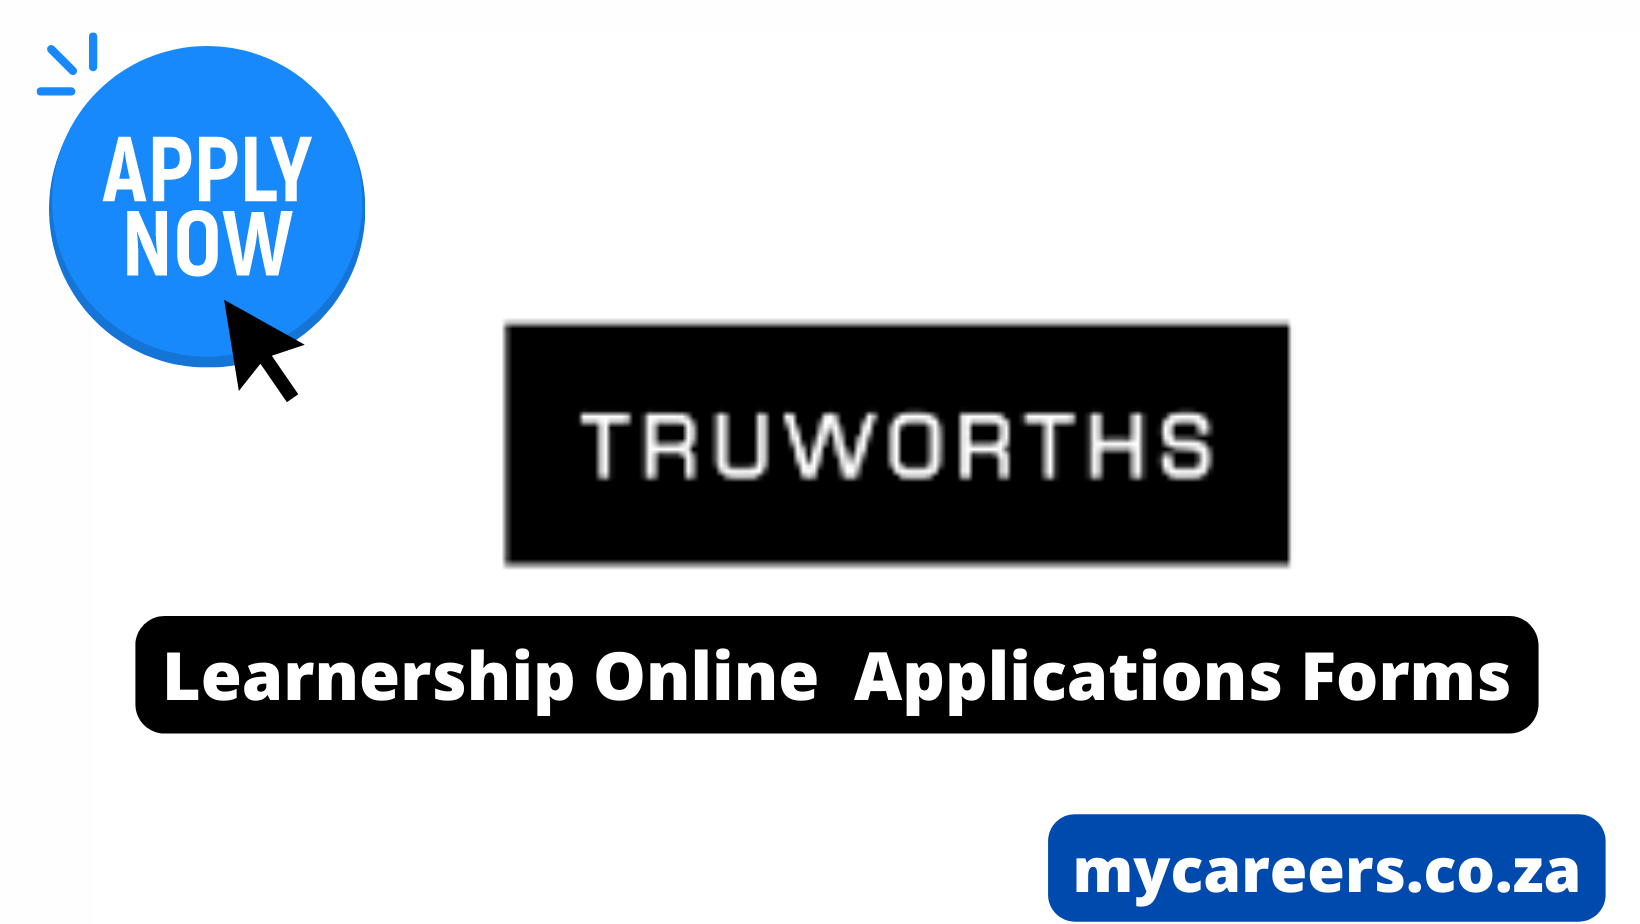 Truworth learnership Applications